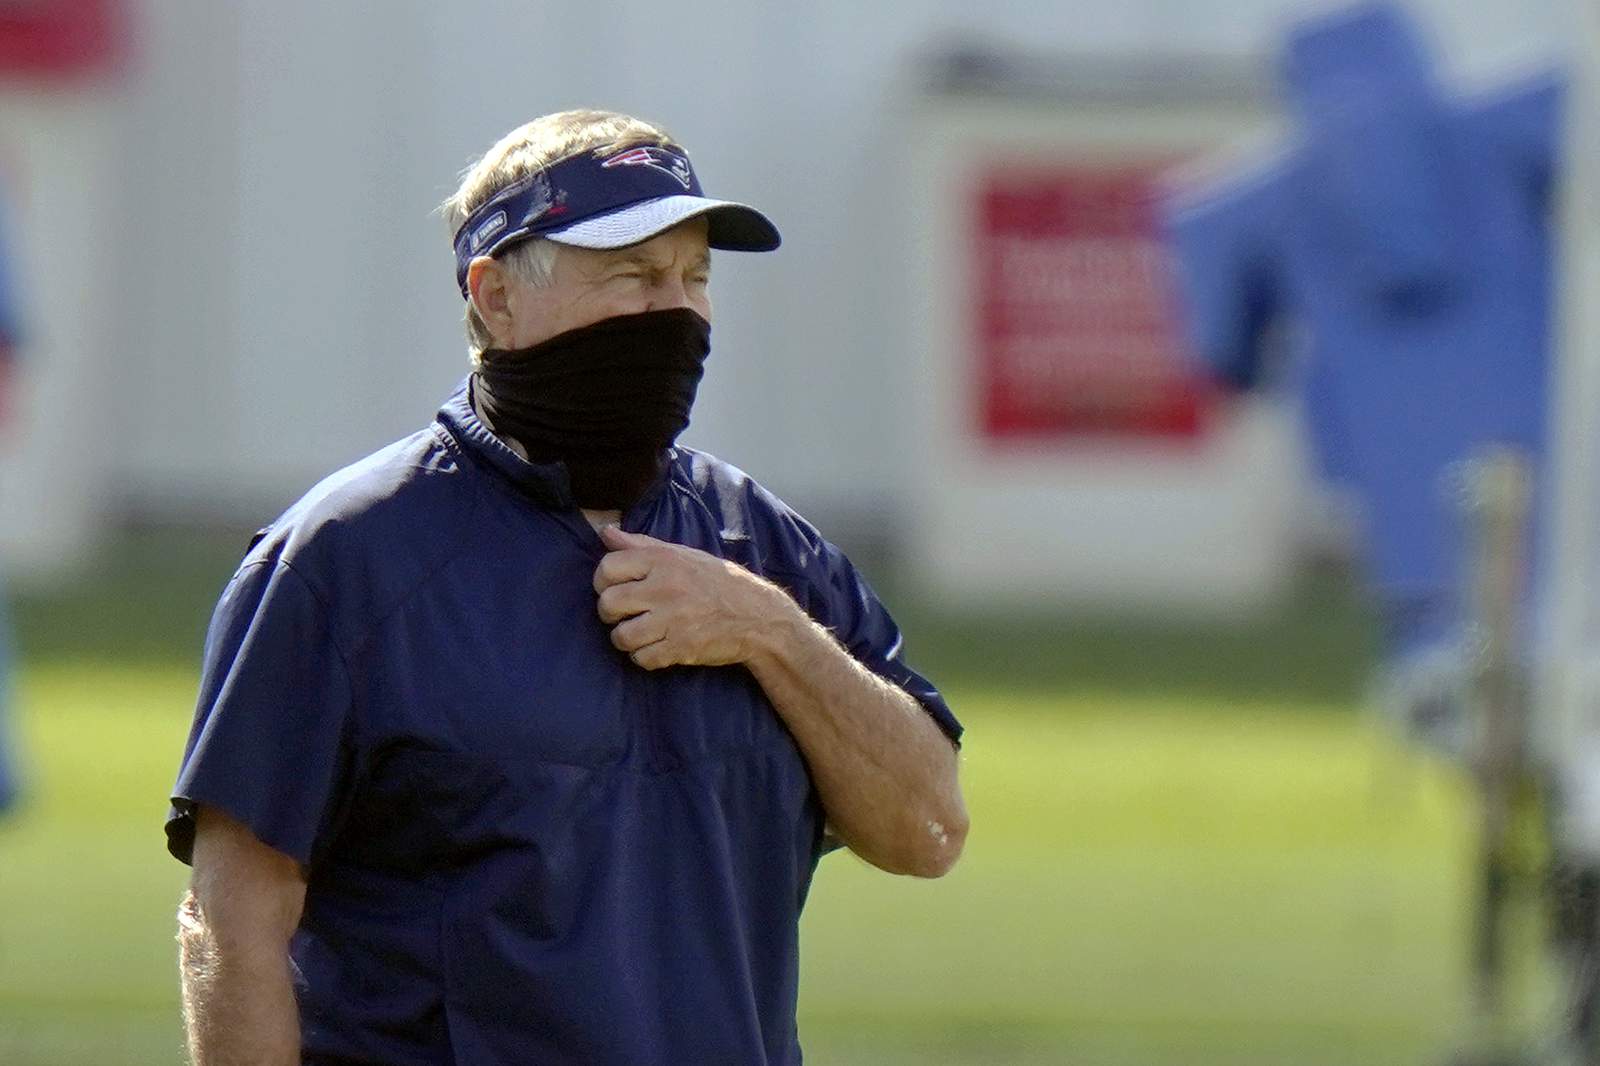 NFL requiring coaches, staff near bench to wear masks